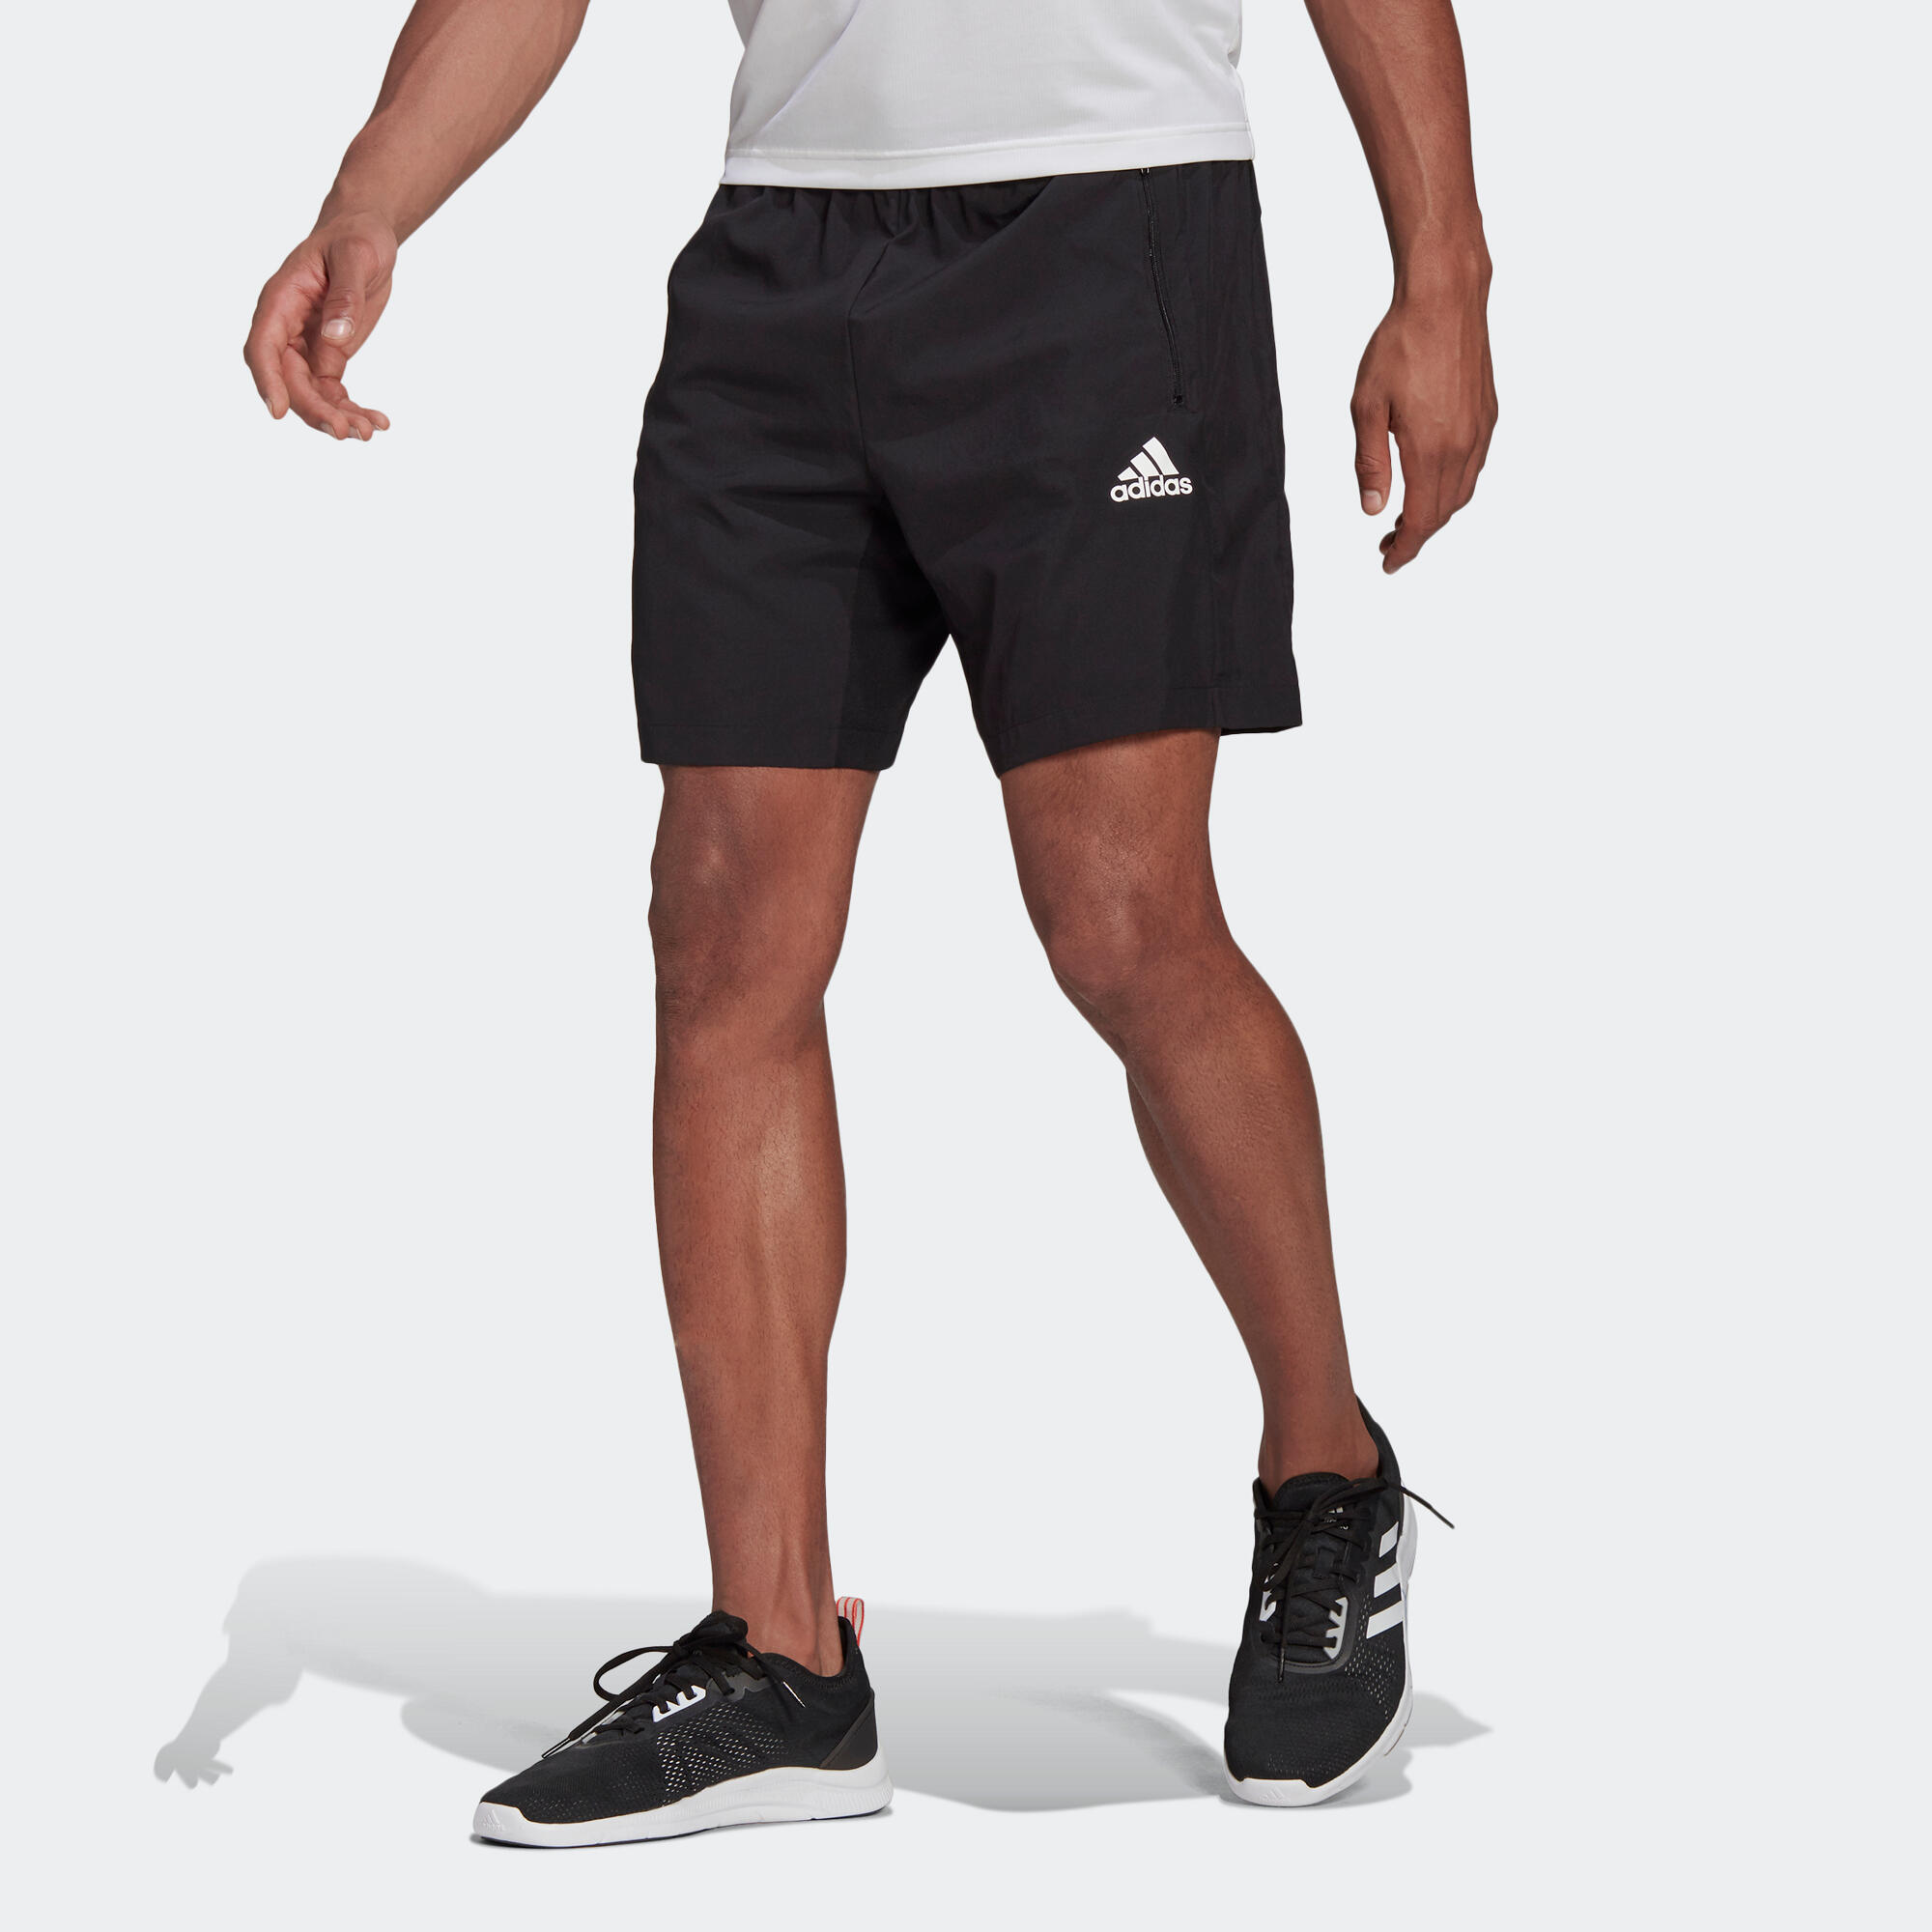 mens sports shorts uk